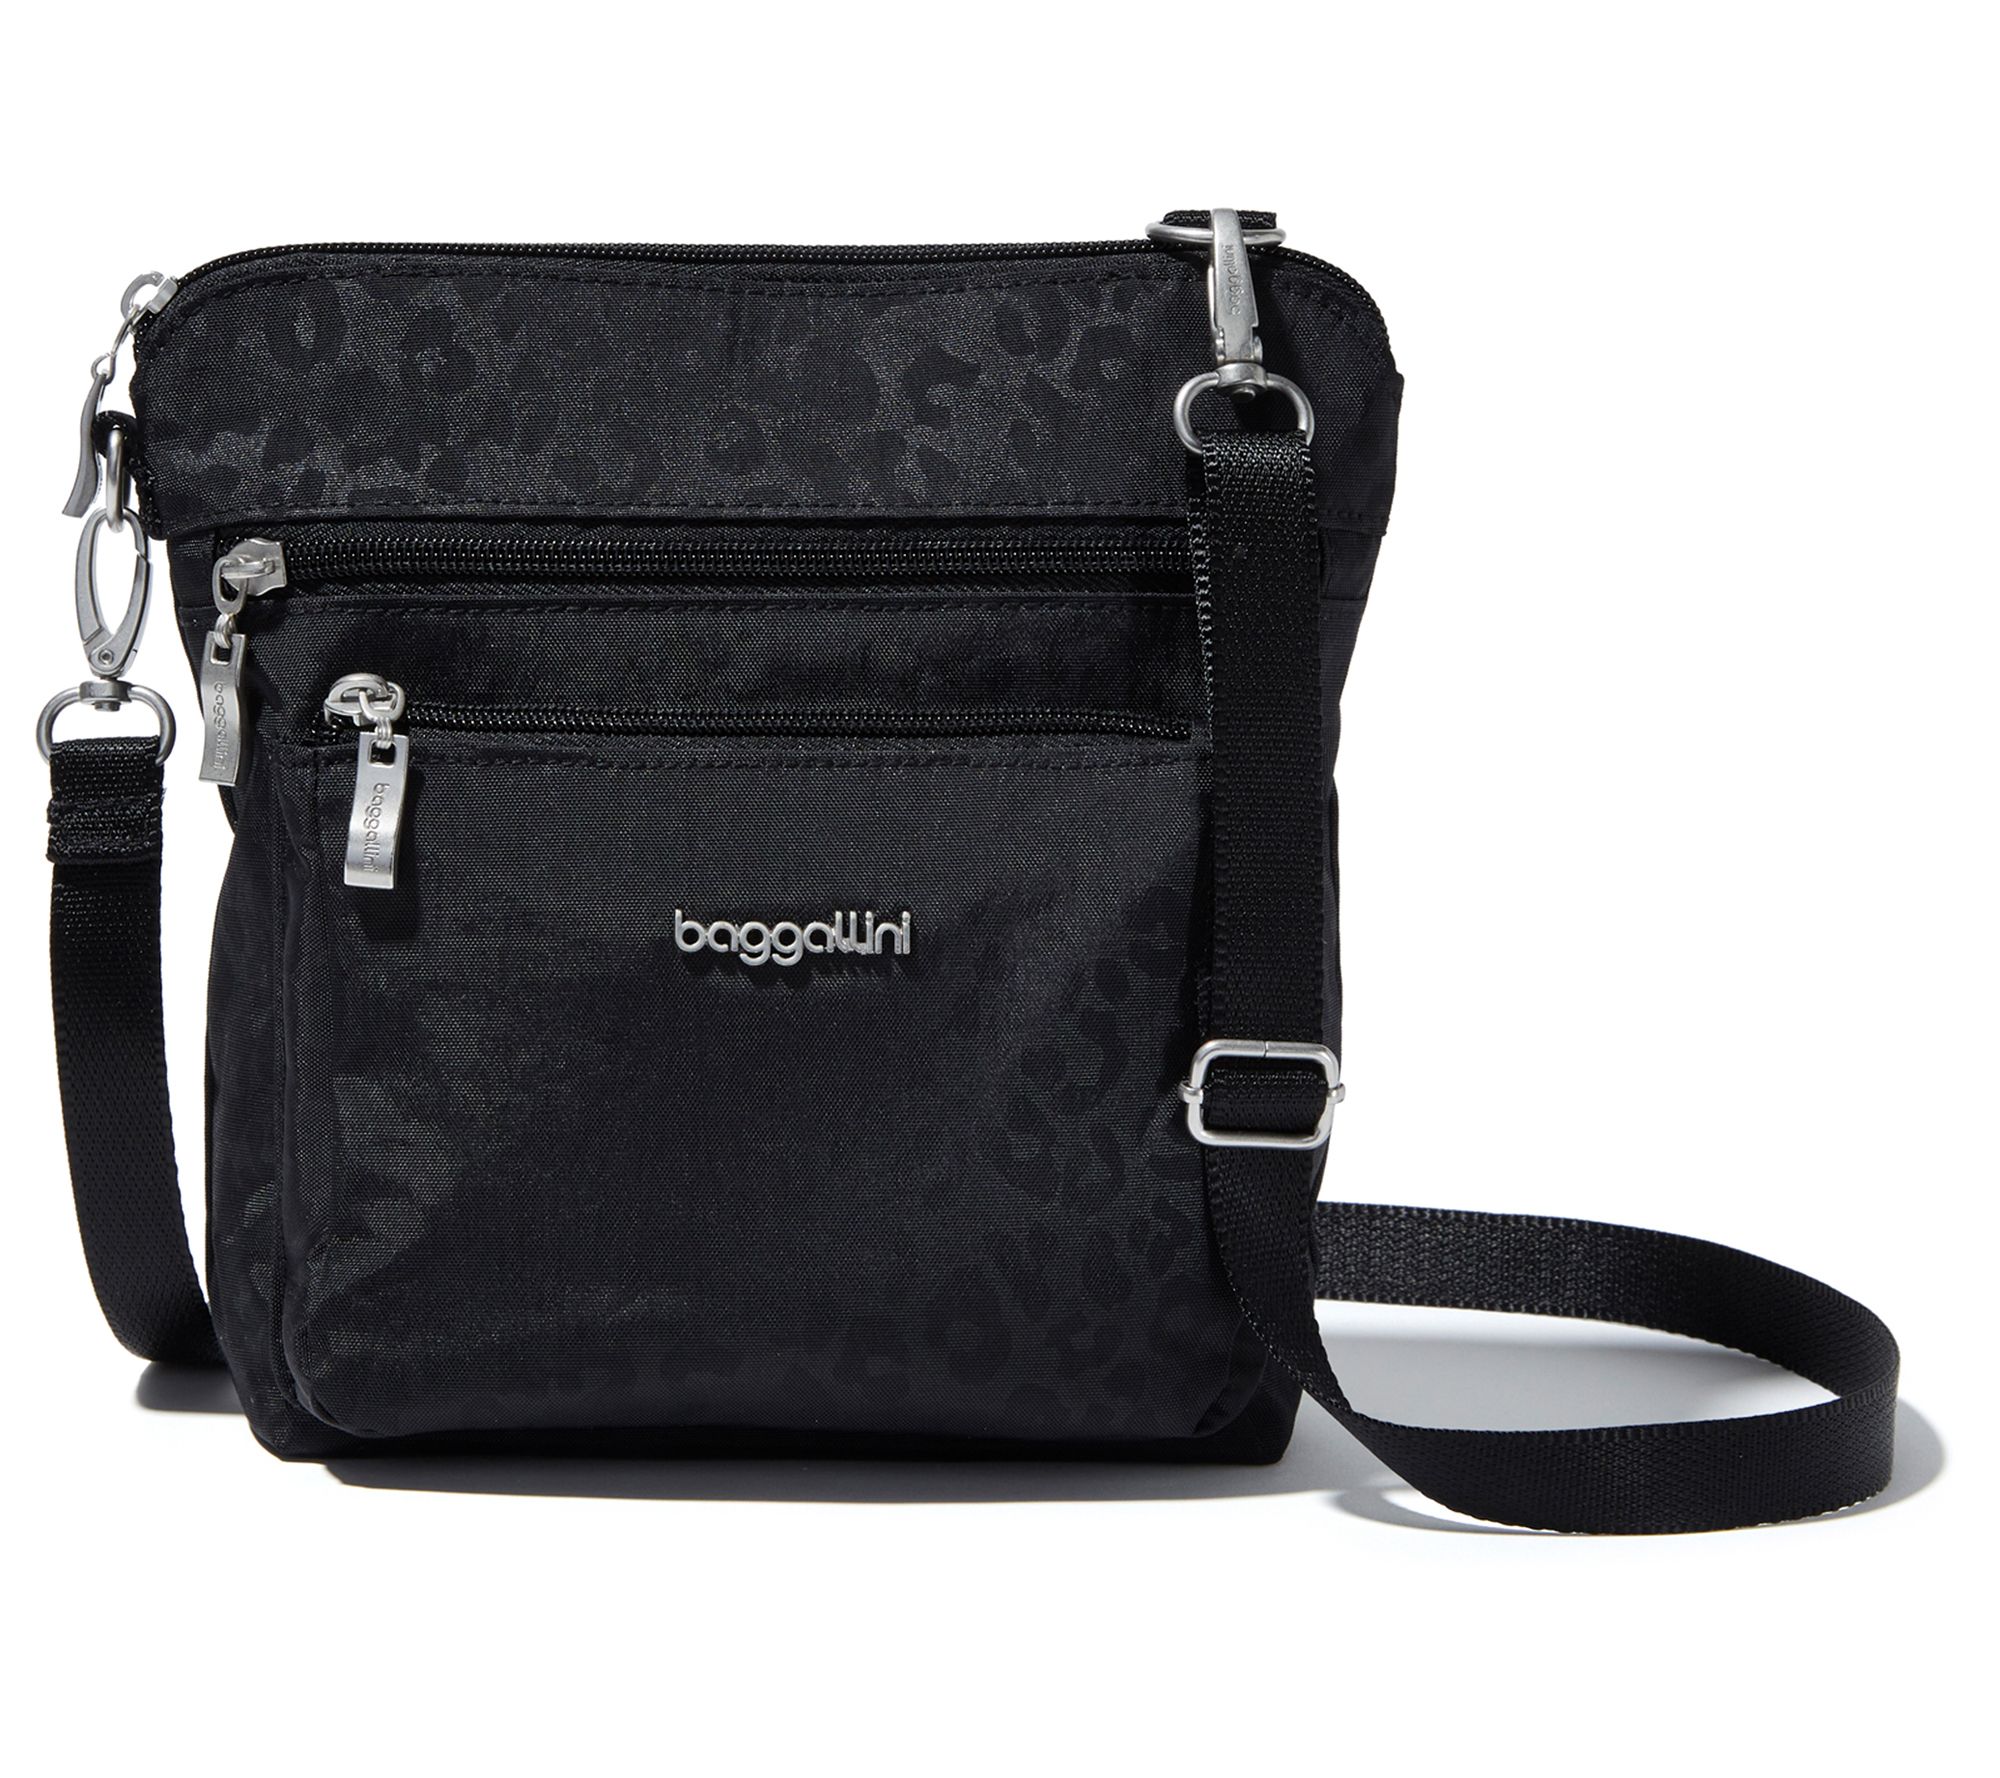  Baggallini Modern Pocket Half Moon Bag Black One Size